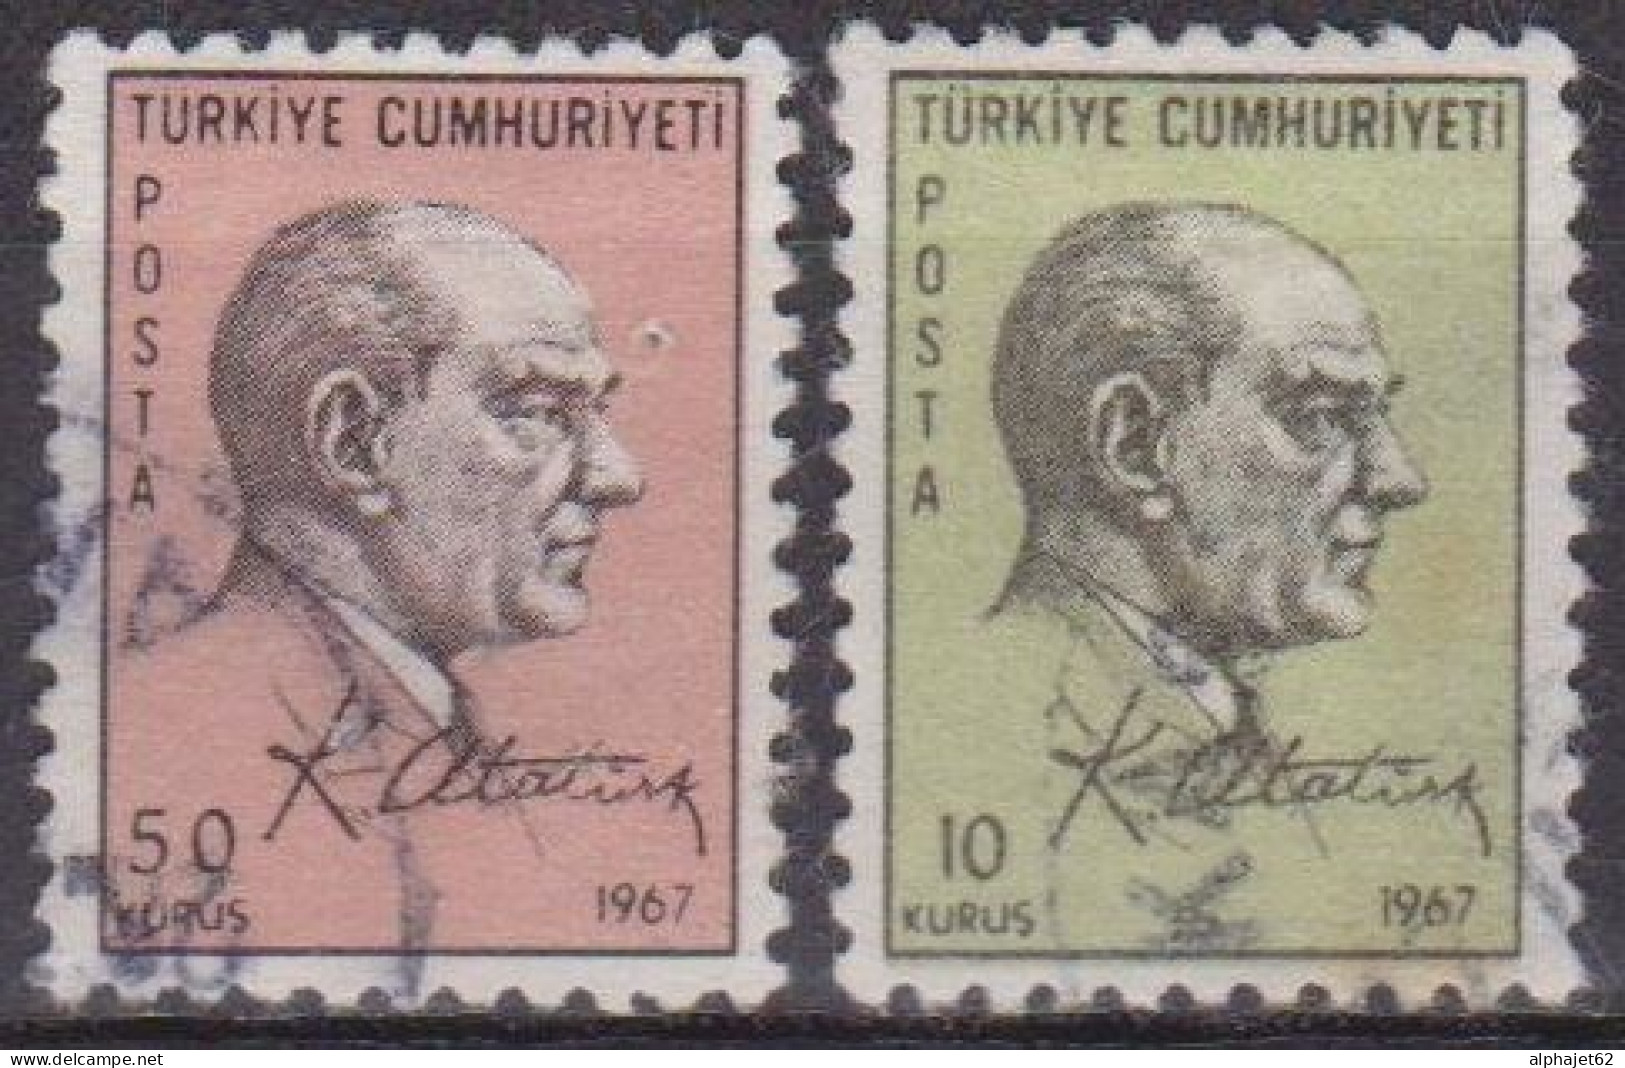 Kemal Ataturk - TURQUIE - Président - N°  1847-1848  - 1967 - Used Stamps